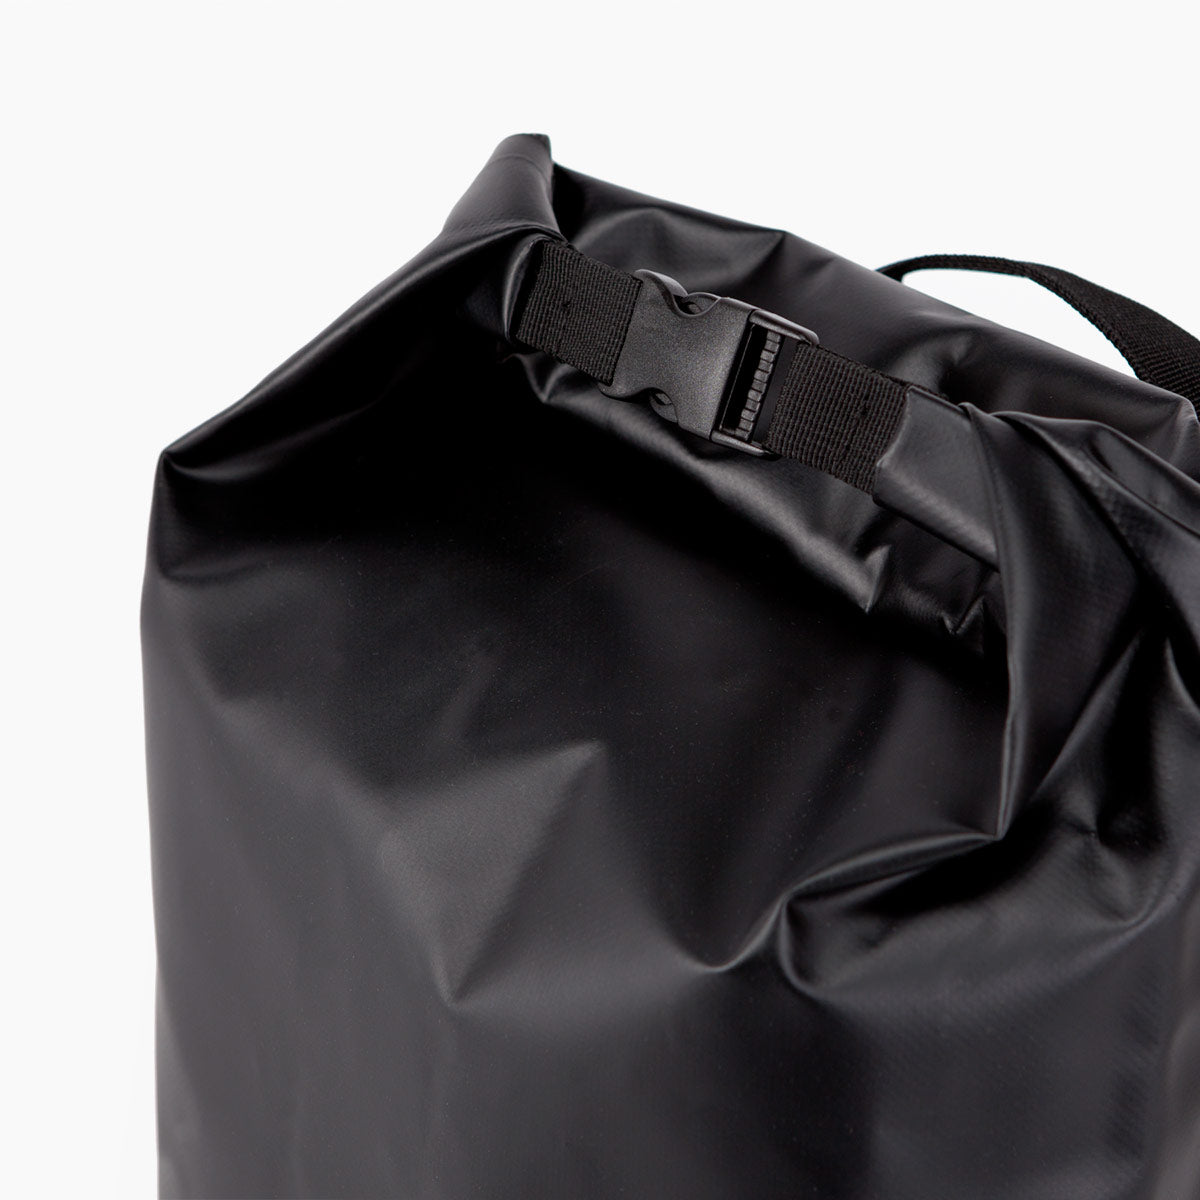 Model B • Backpack • Medium • Black